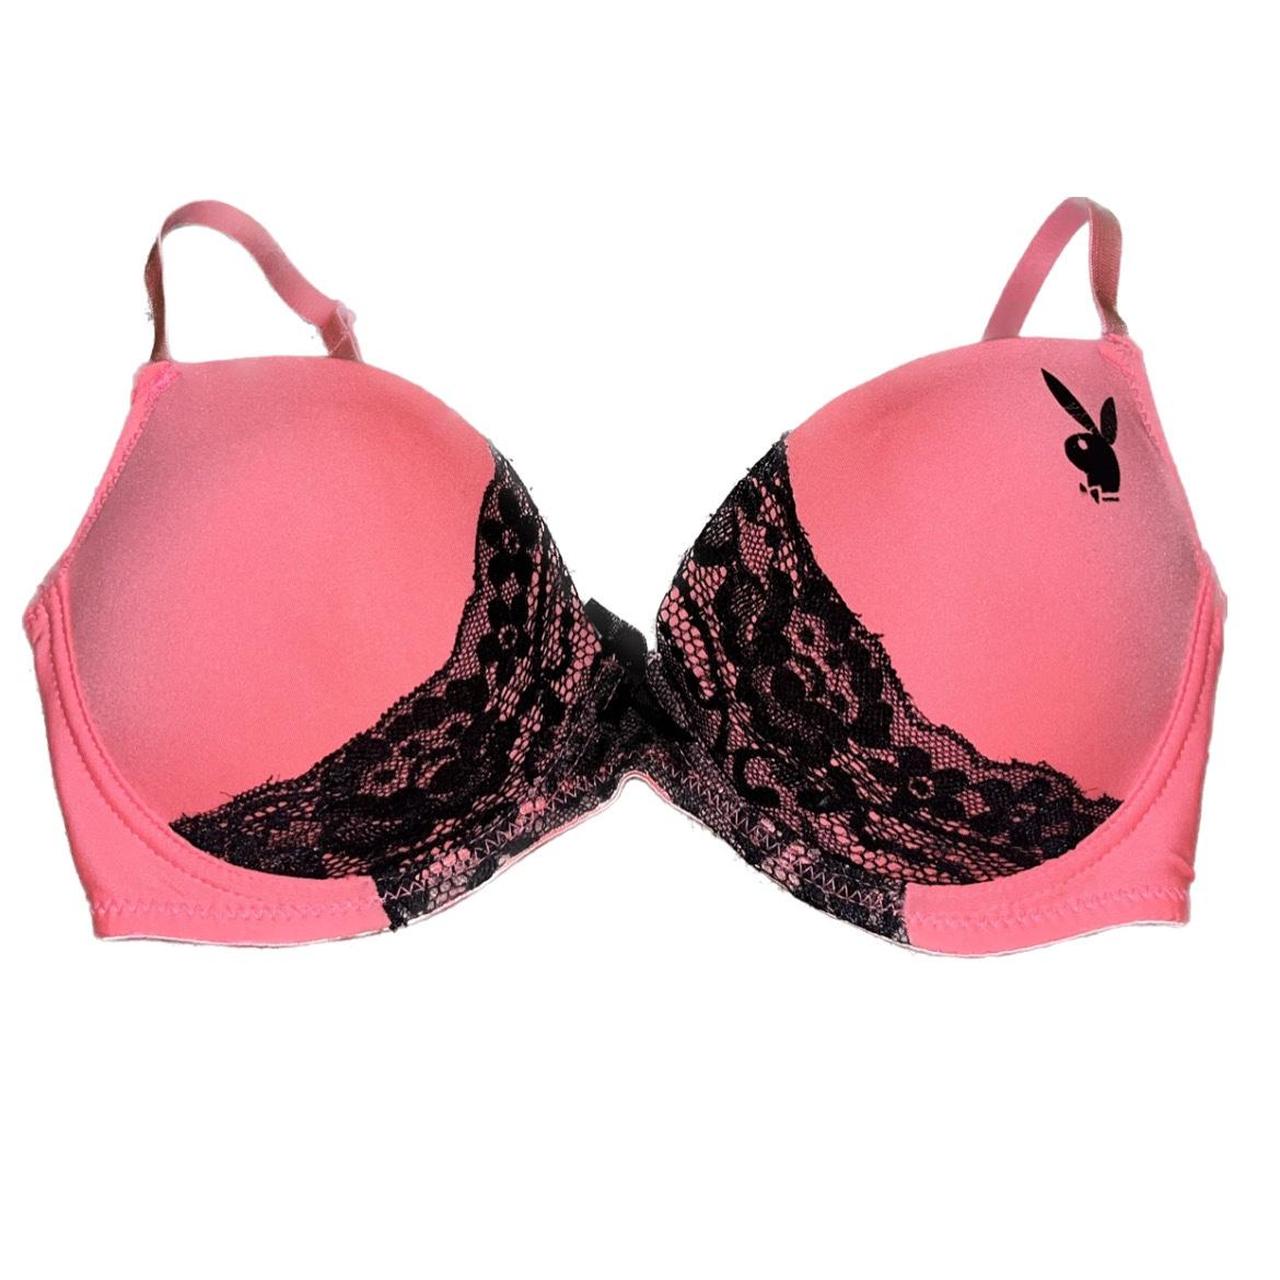 PLAYBOY, Intimates & Sleepwear, Nwt Vintage Playboy Bunny Pink Pushup Bra  36b